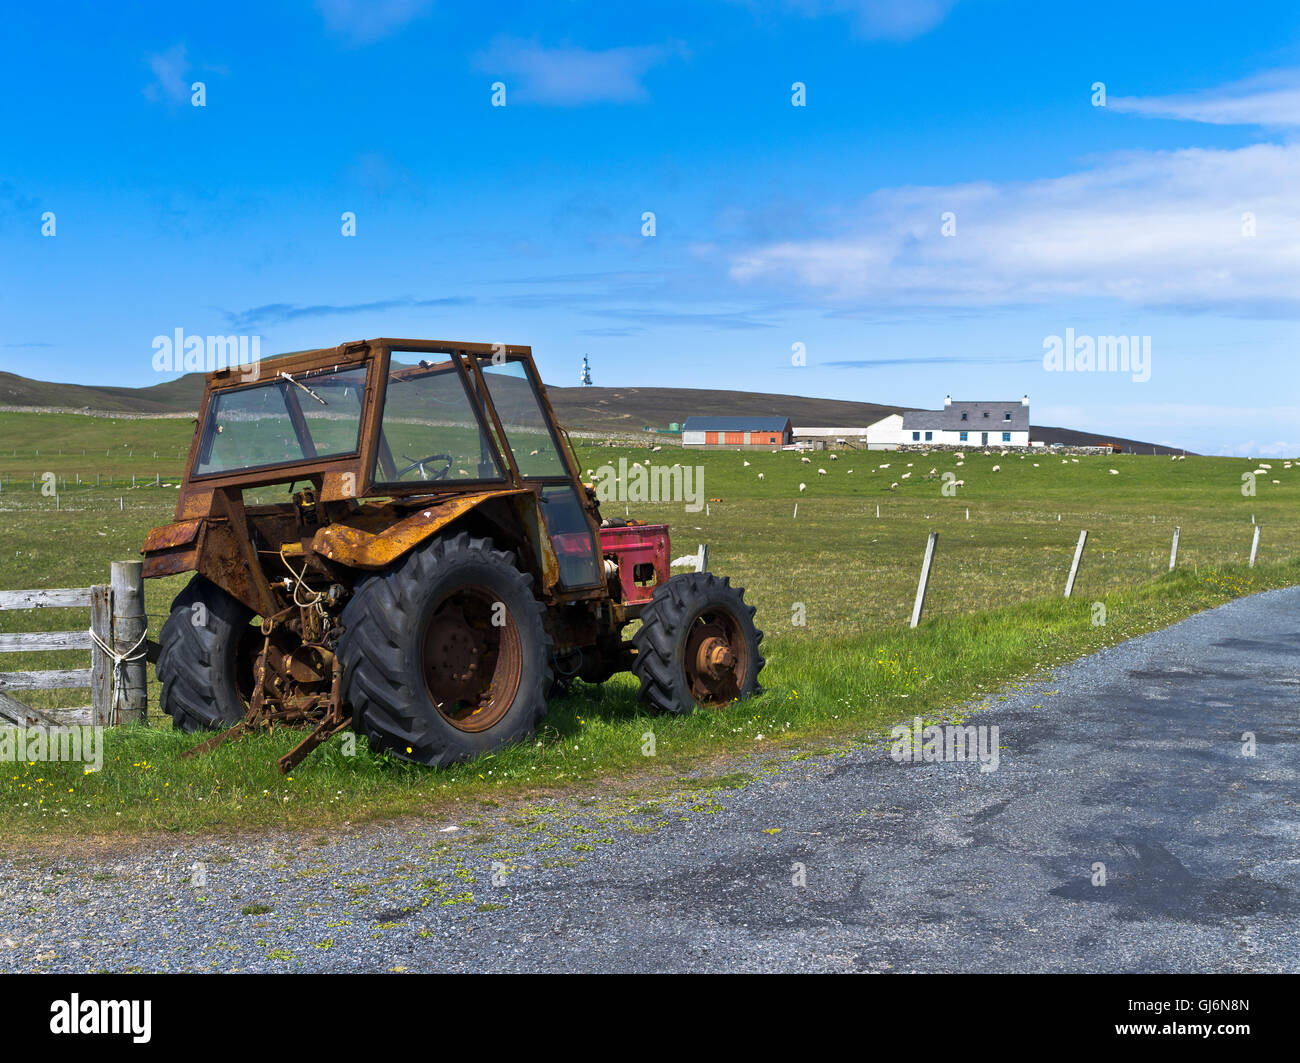 dh  FAIR ISLE SHETLAND Rust old farm tractor remote farming scotland uk Stock Photo